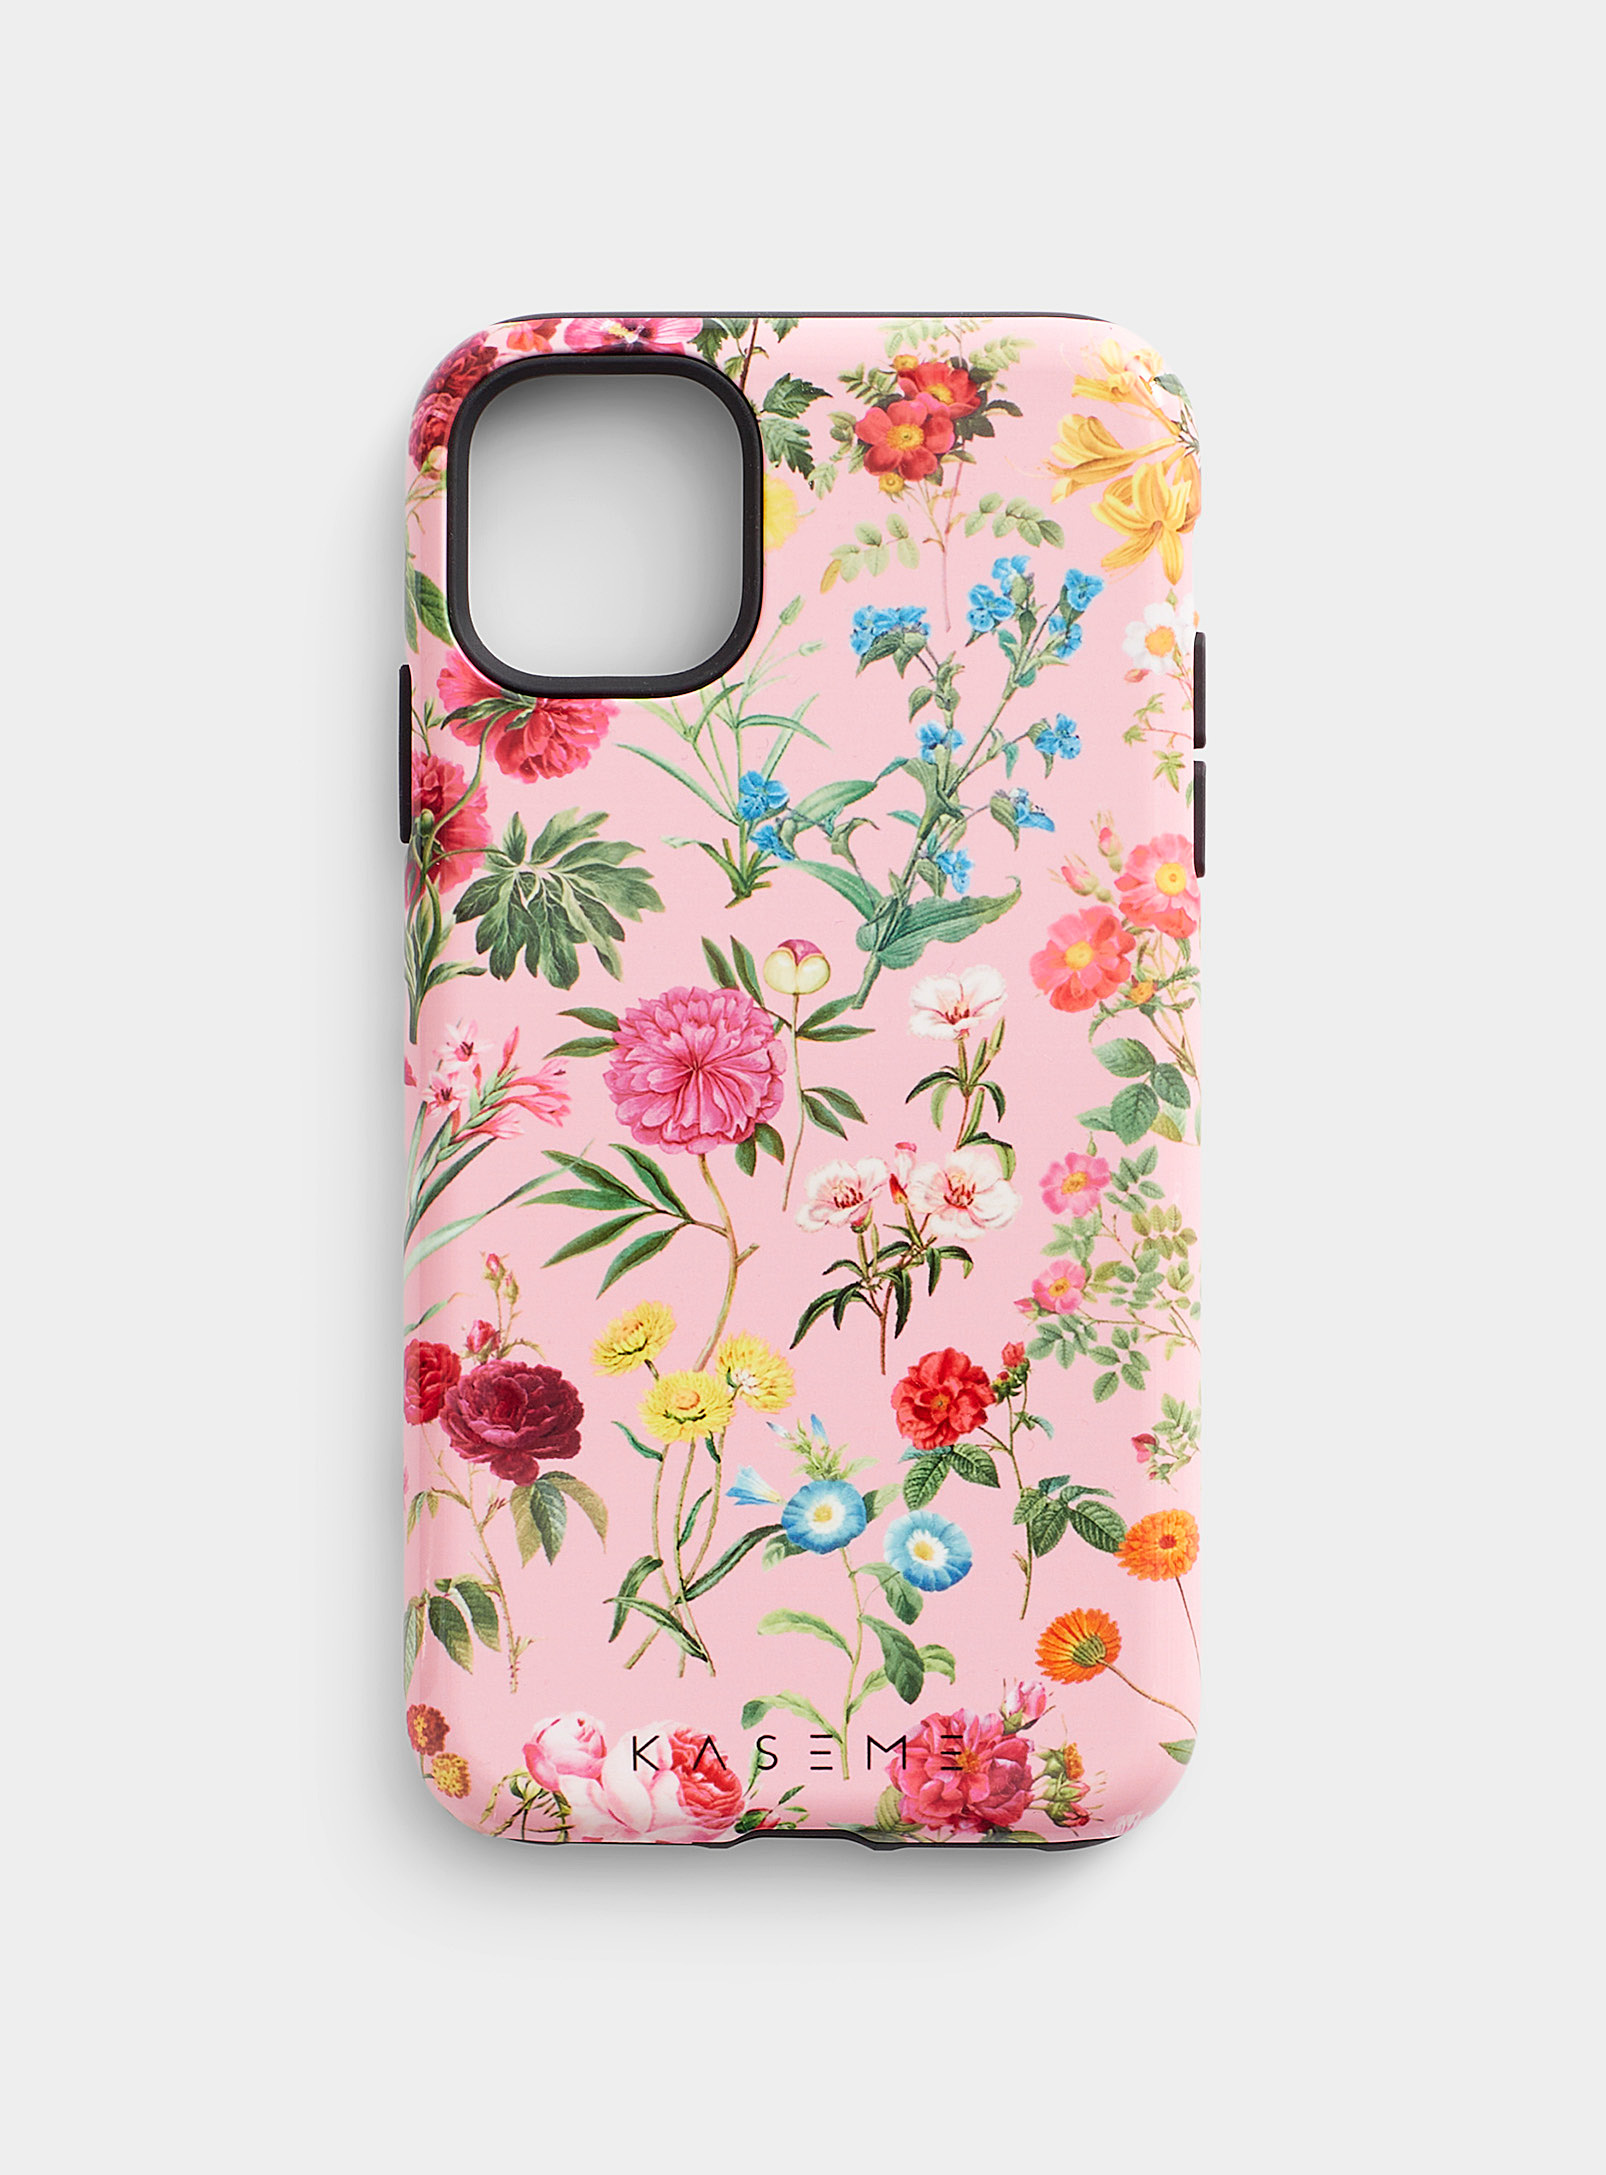 Kaseme Floral Garden Iphone 11 Case In Pink